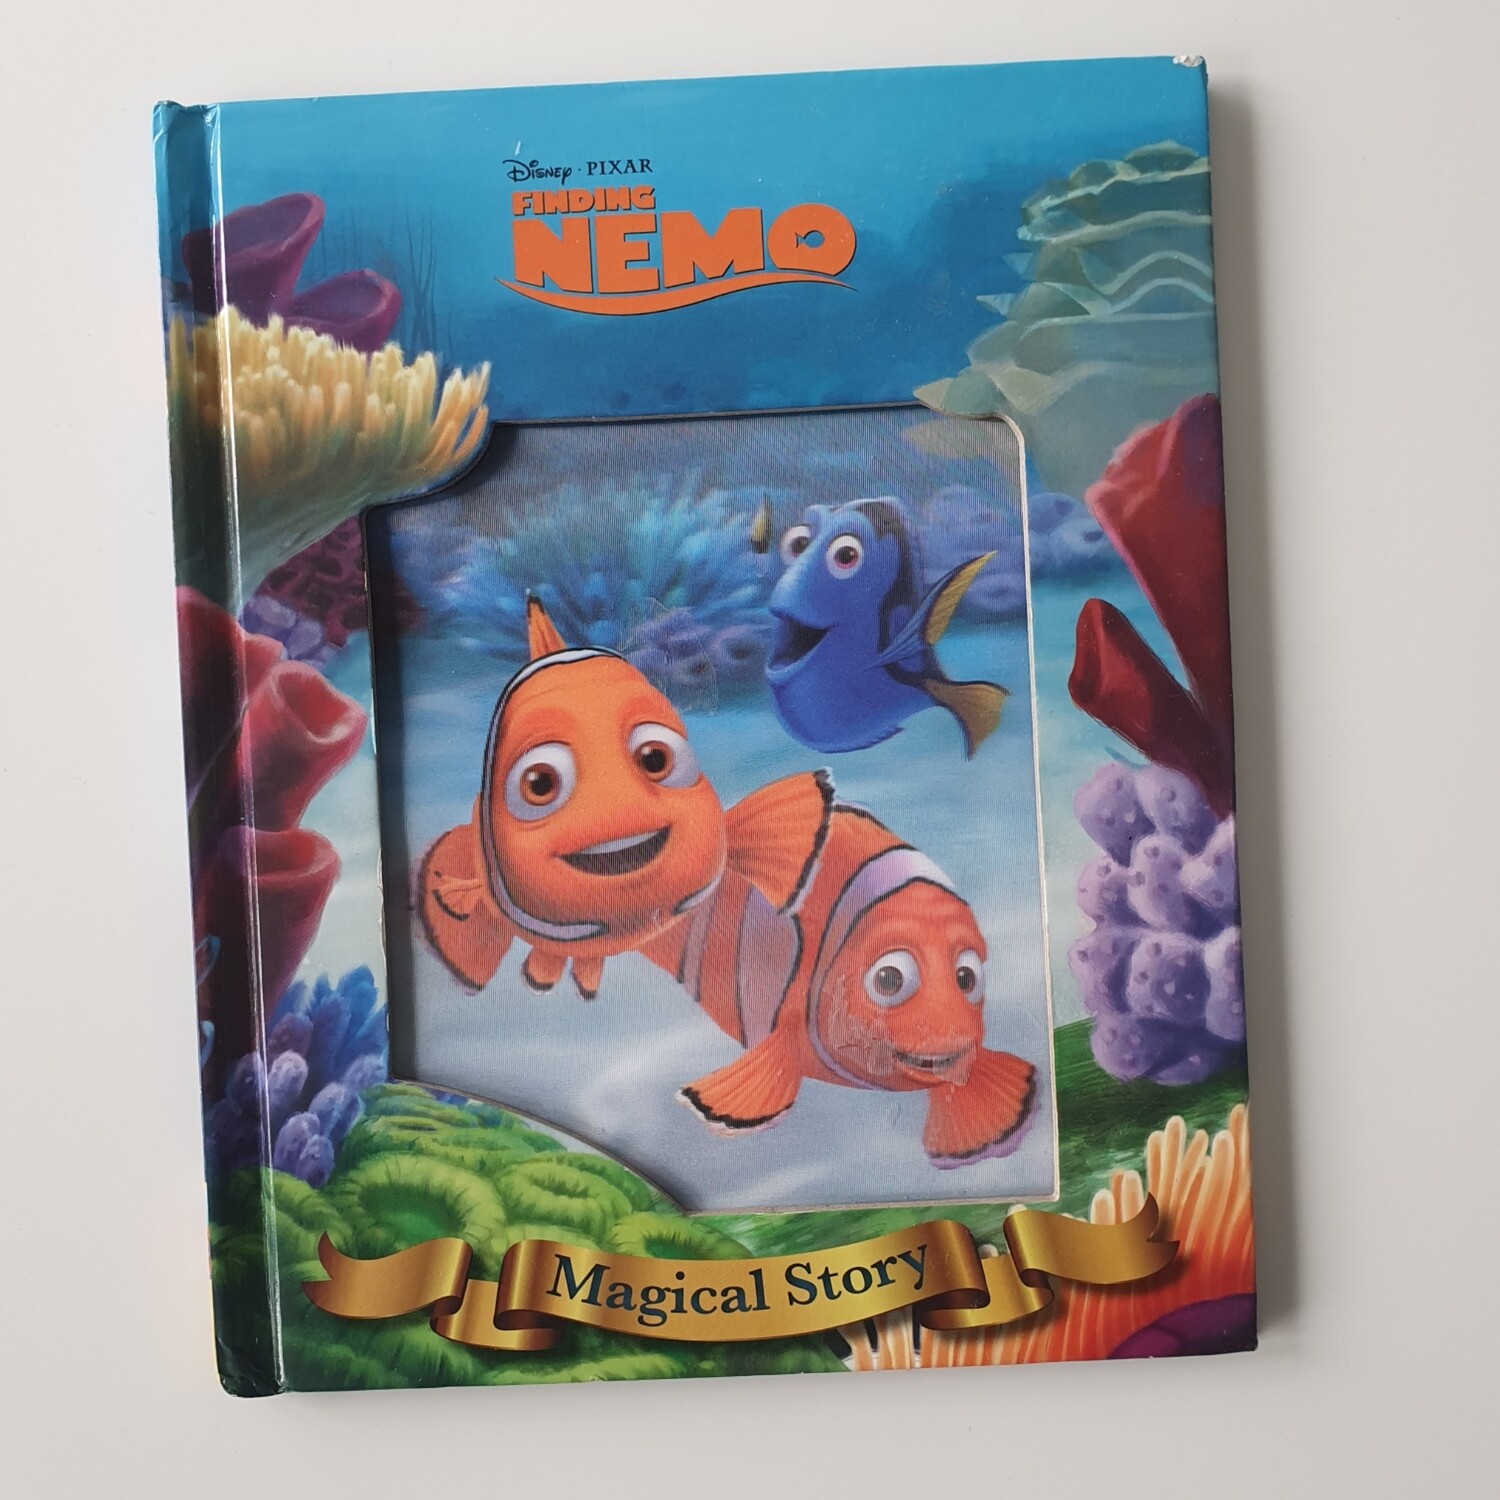 Finding Nemo Hologram / lenticular print Notebook - no original book pages